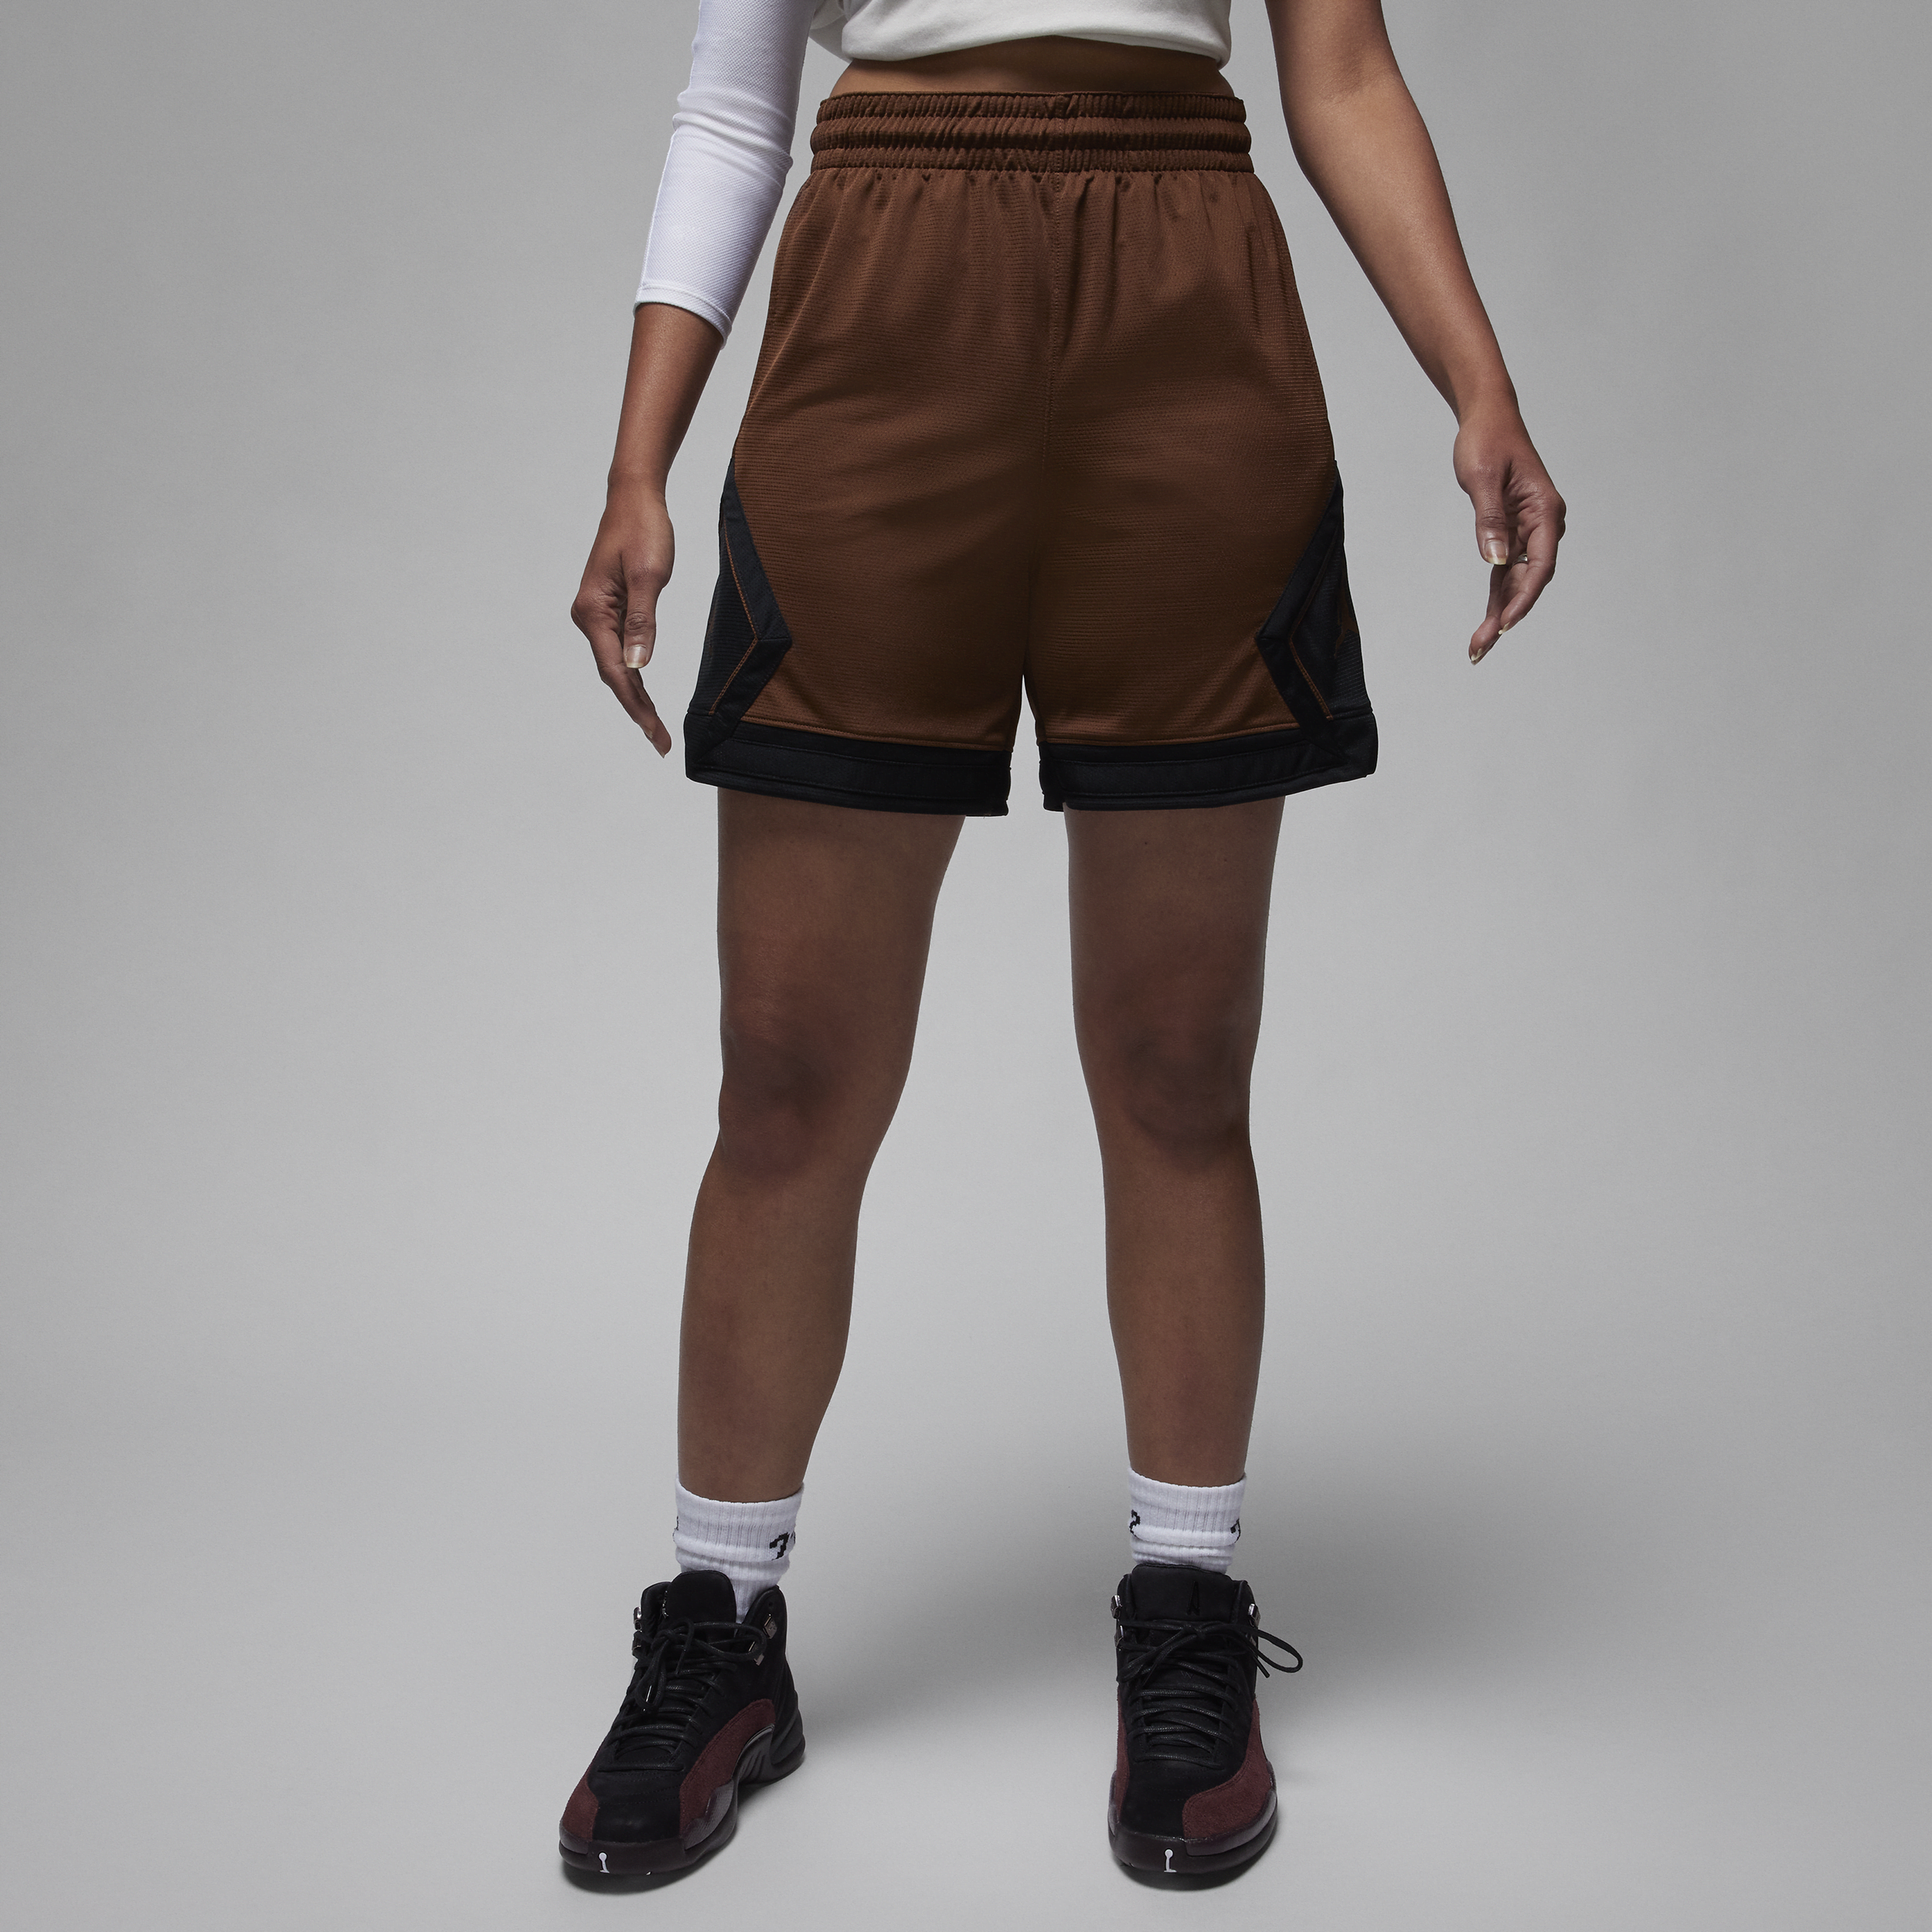 Jordan Sport Diamond-shorts til kvinder - brun